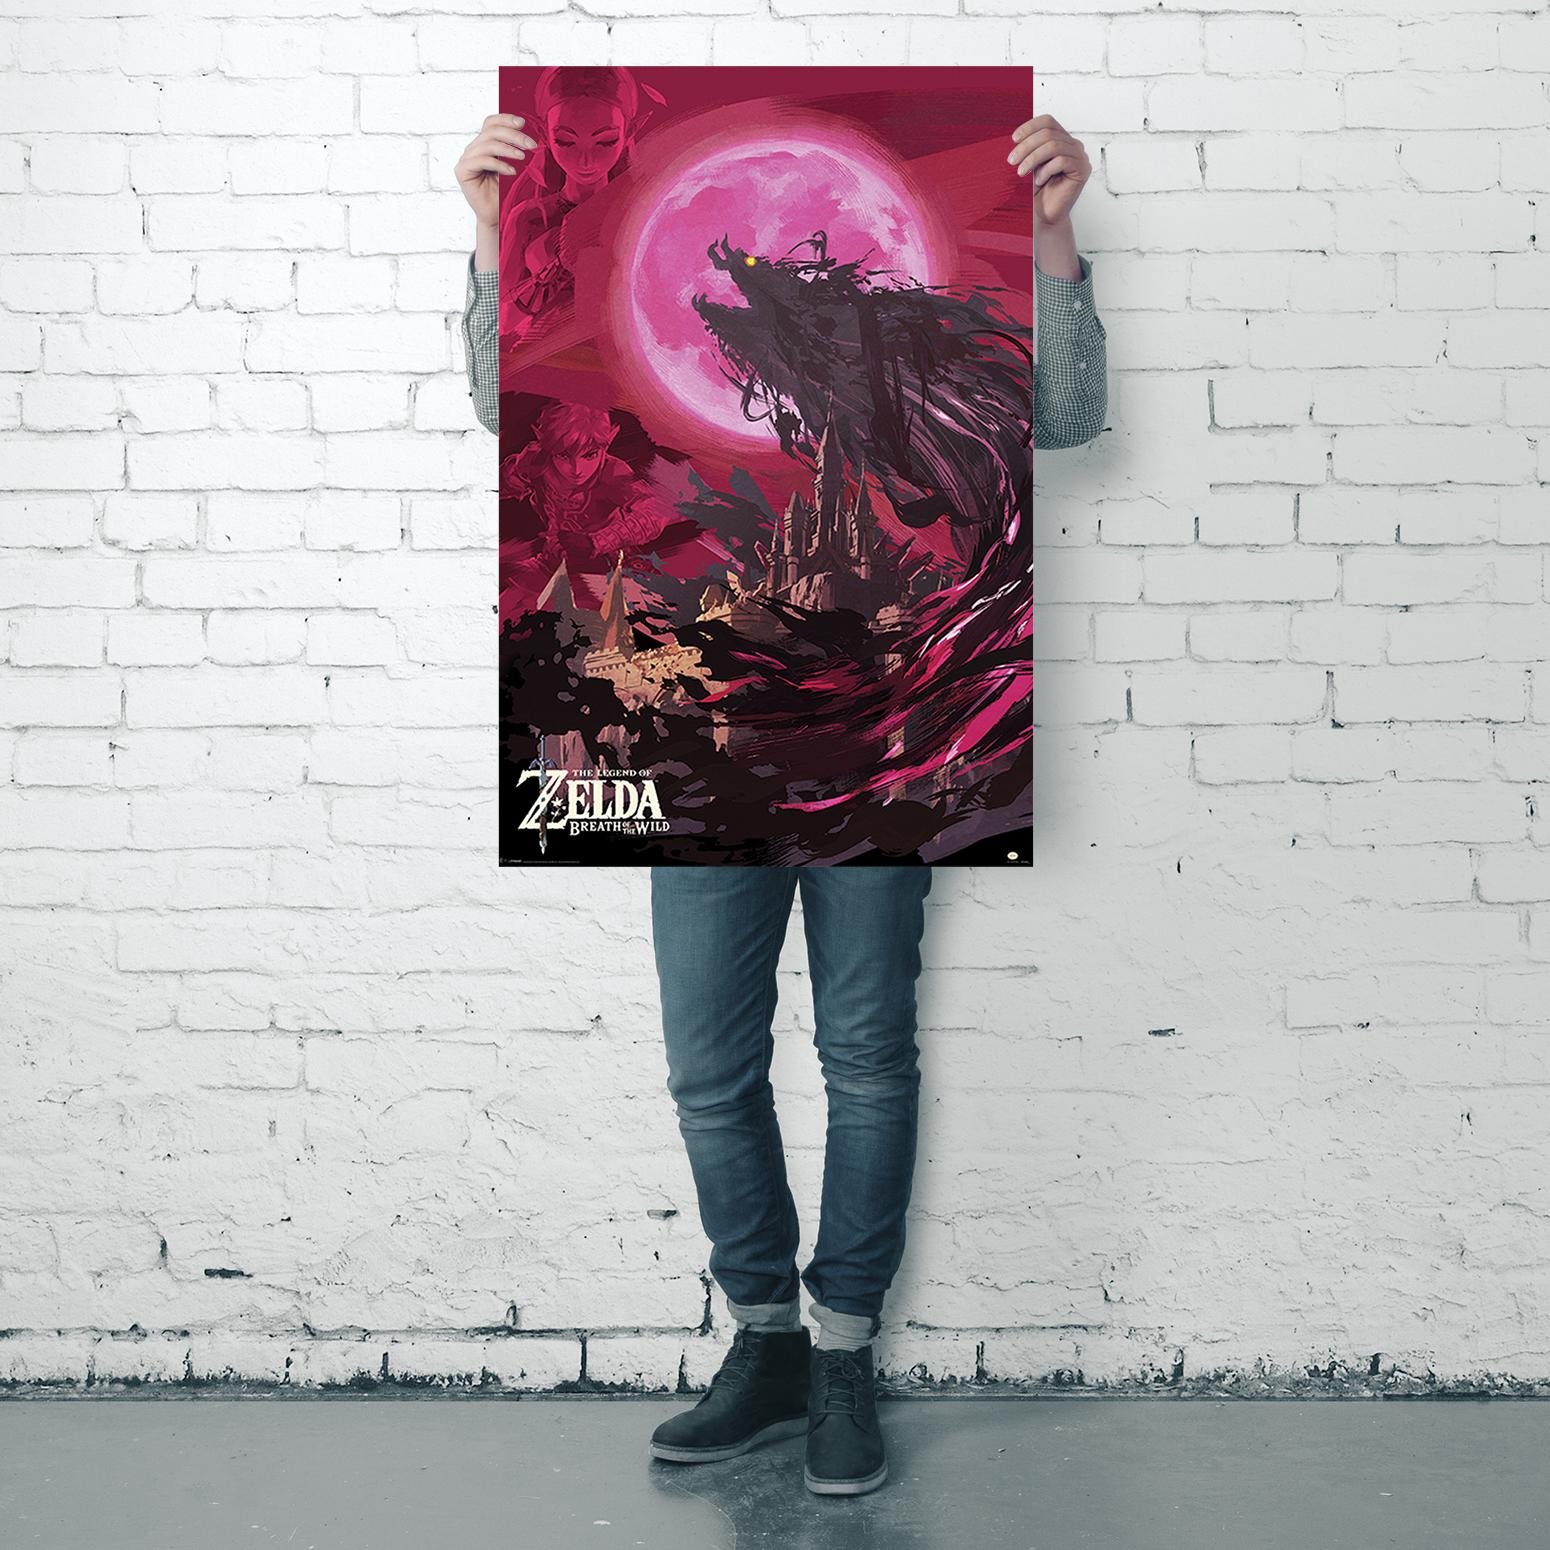 Legend Großformatige Wild Poster Of of INTERNATIONAL The Zelda Poster Breath PYRAMID The